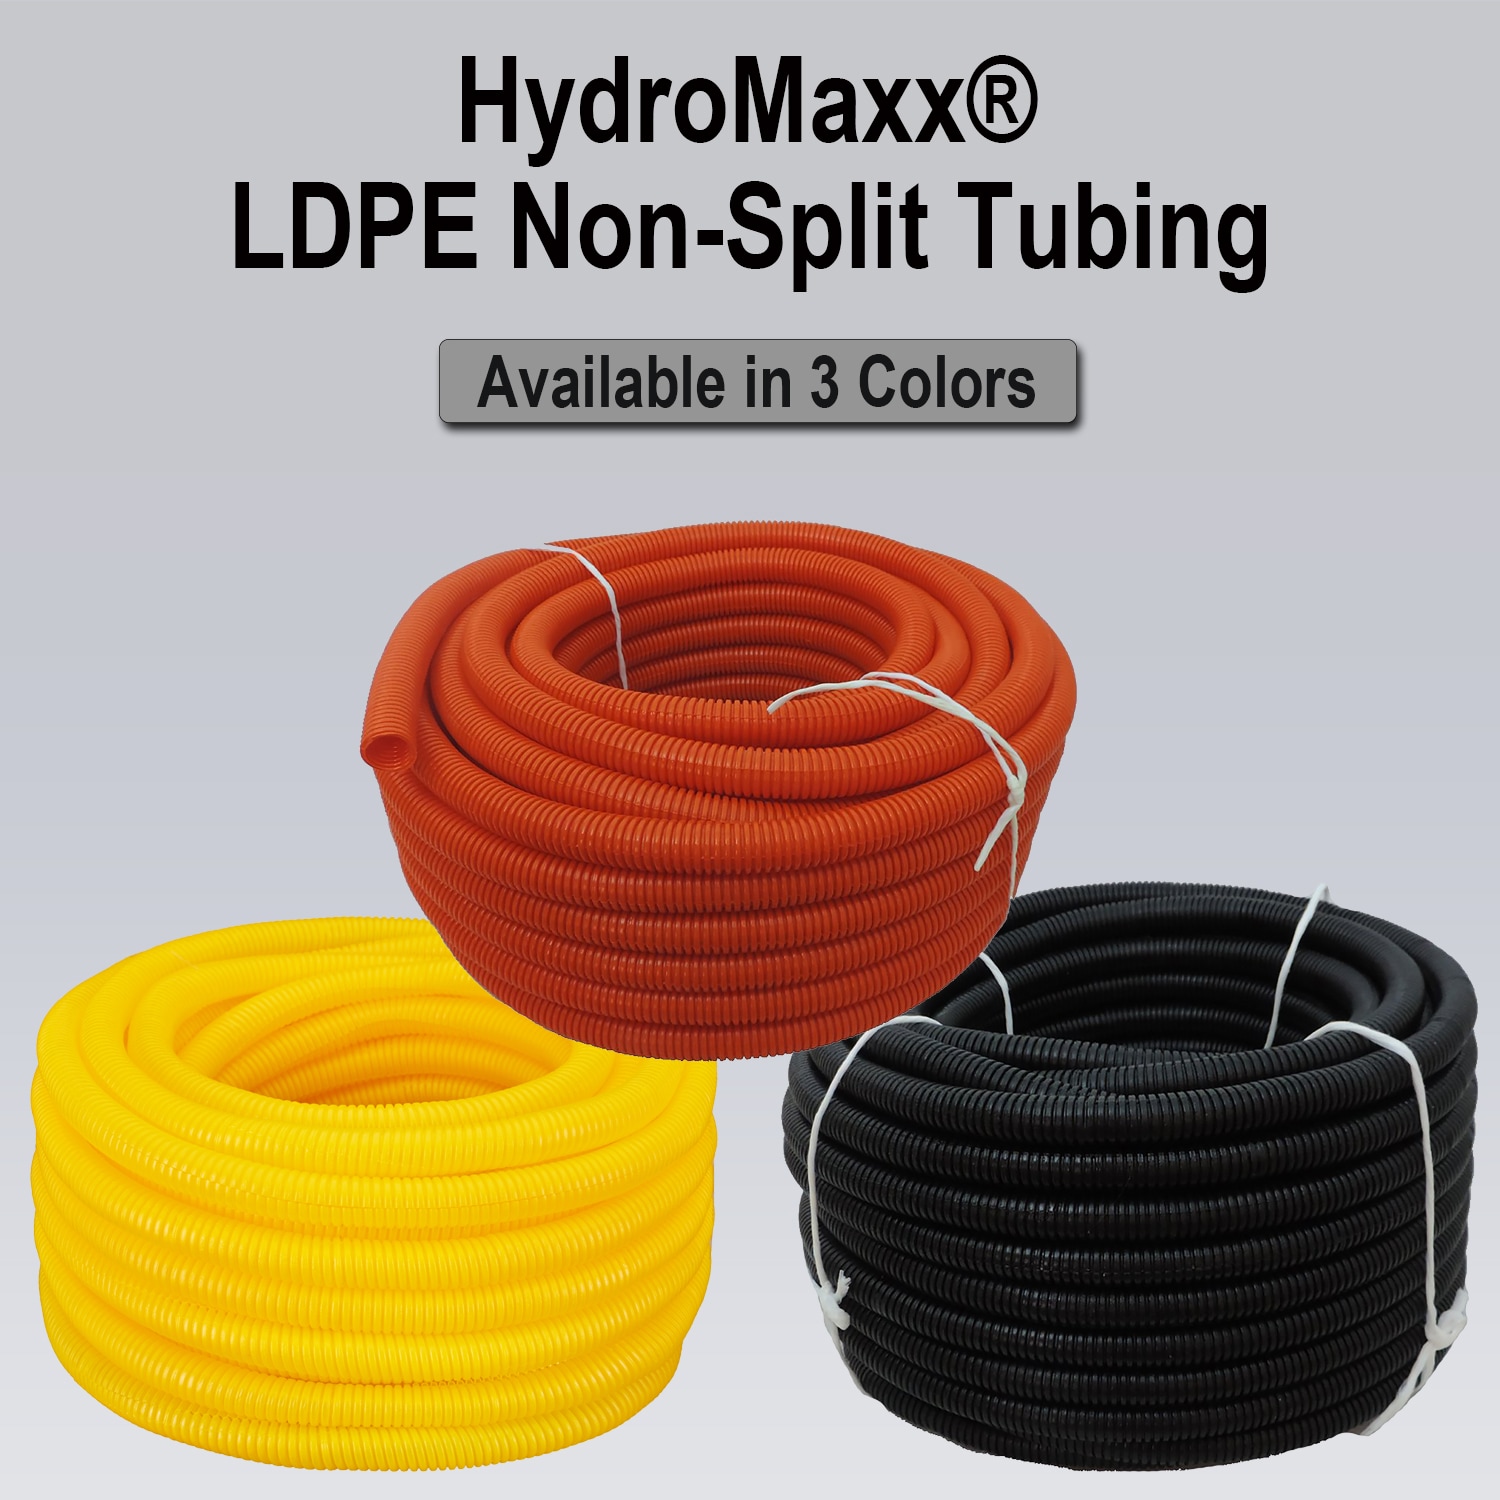 HydroMaxx 100-ft x 1.5-in Ldpe Orange Non-split Tubing Wire Loom